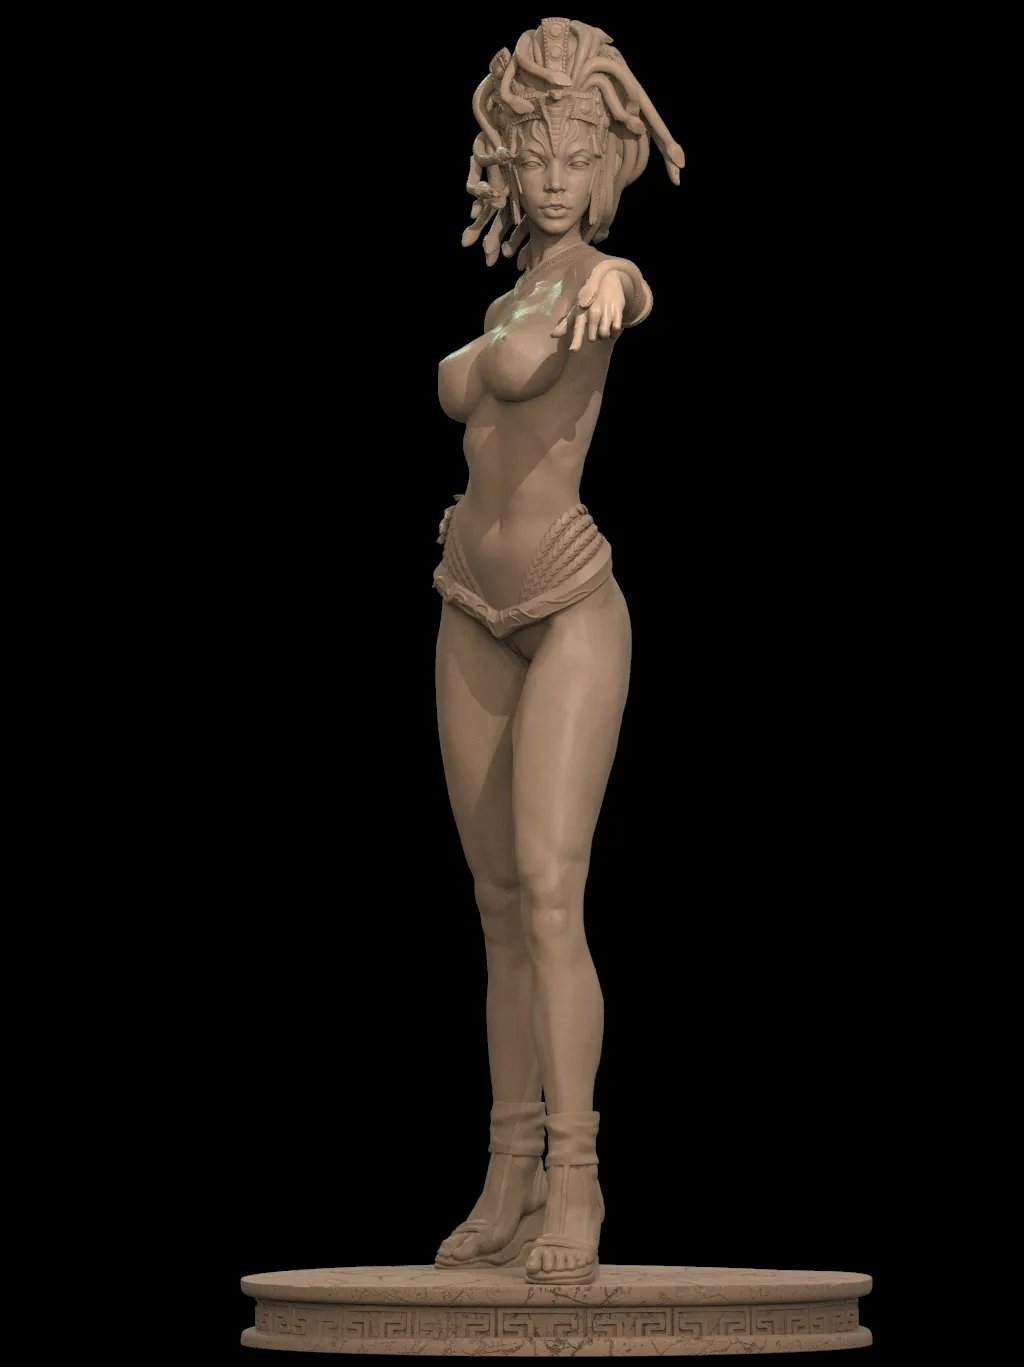 Greek mythology Medusa NSFW Figurine 3D Printed Fanart